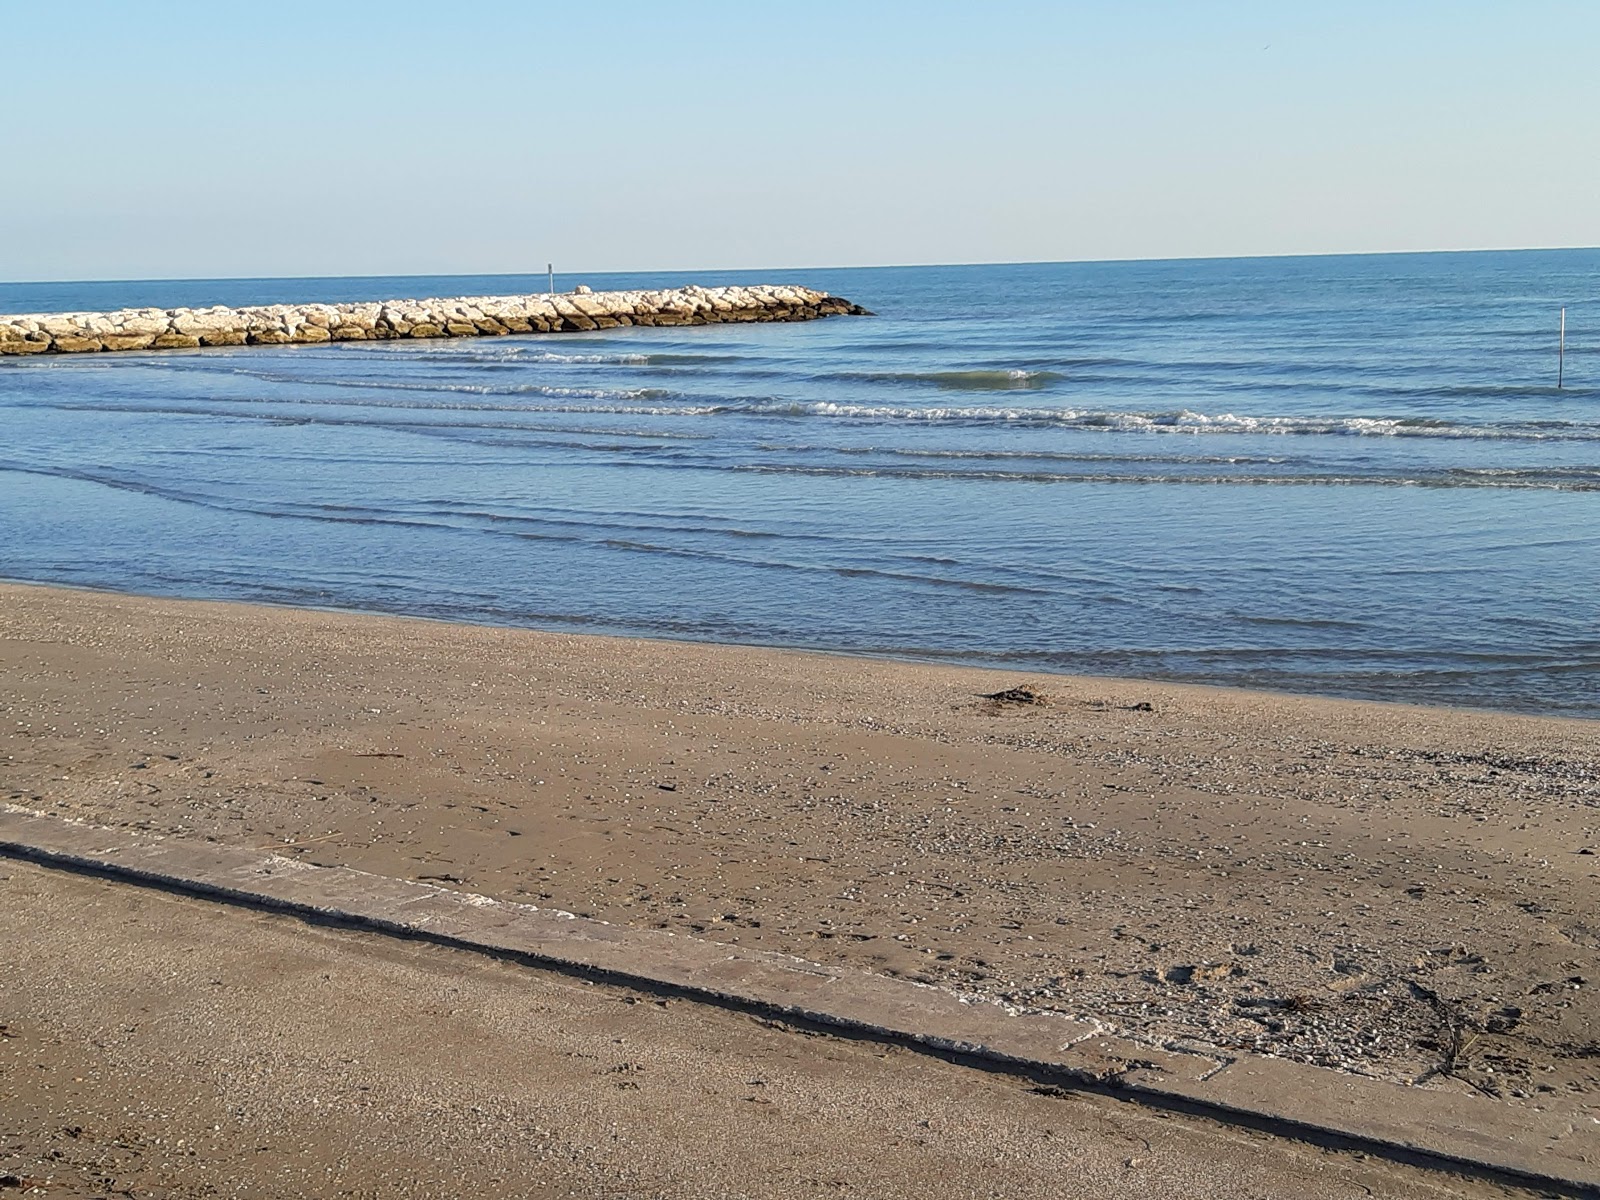 Foto de Spiaggia di Caorle - lugar popular entre os apreciadores de relaxamento